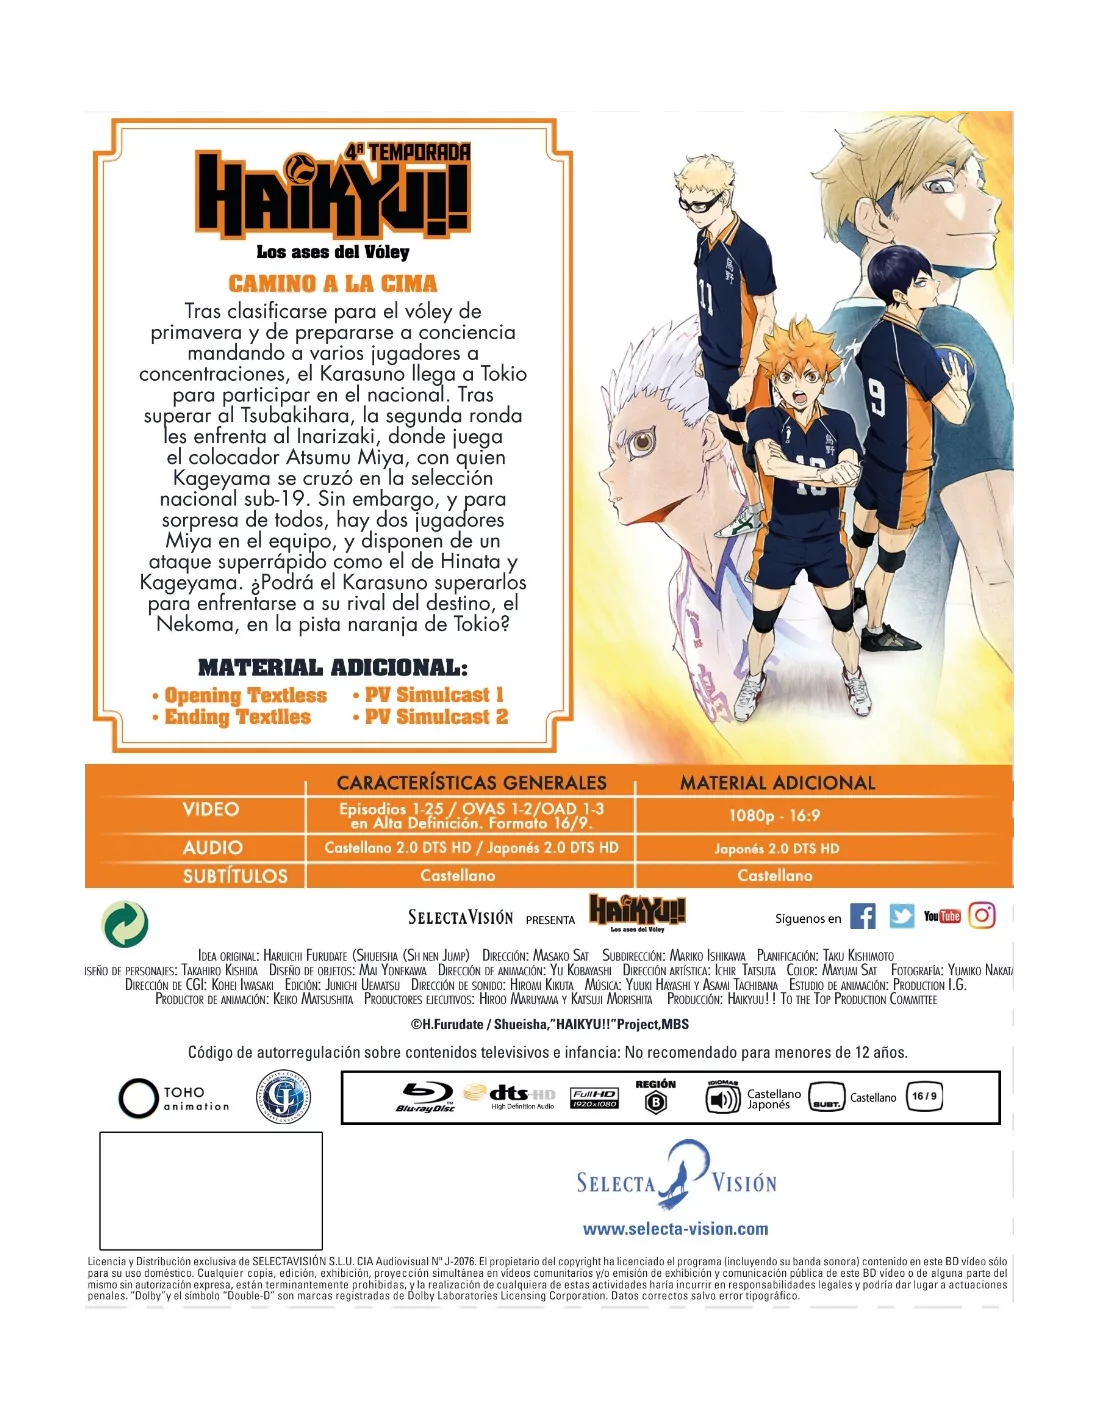 Haikyu!!: Season 4 Blu-ray (Complete Collection / Includes OVA 1 & 2)